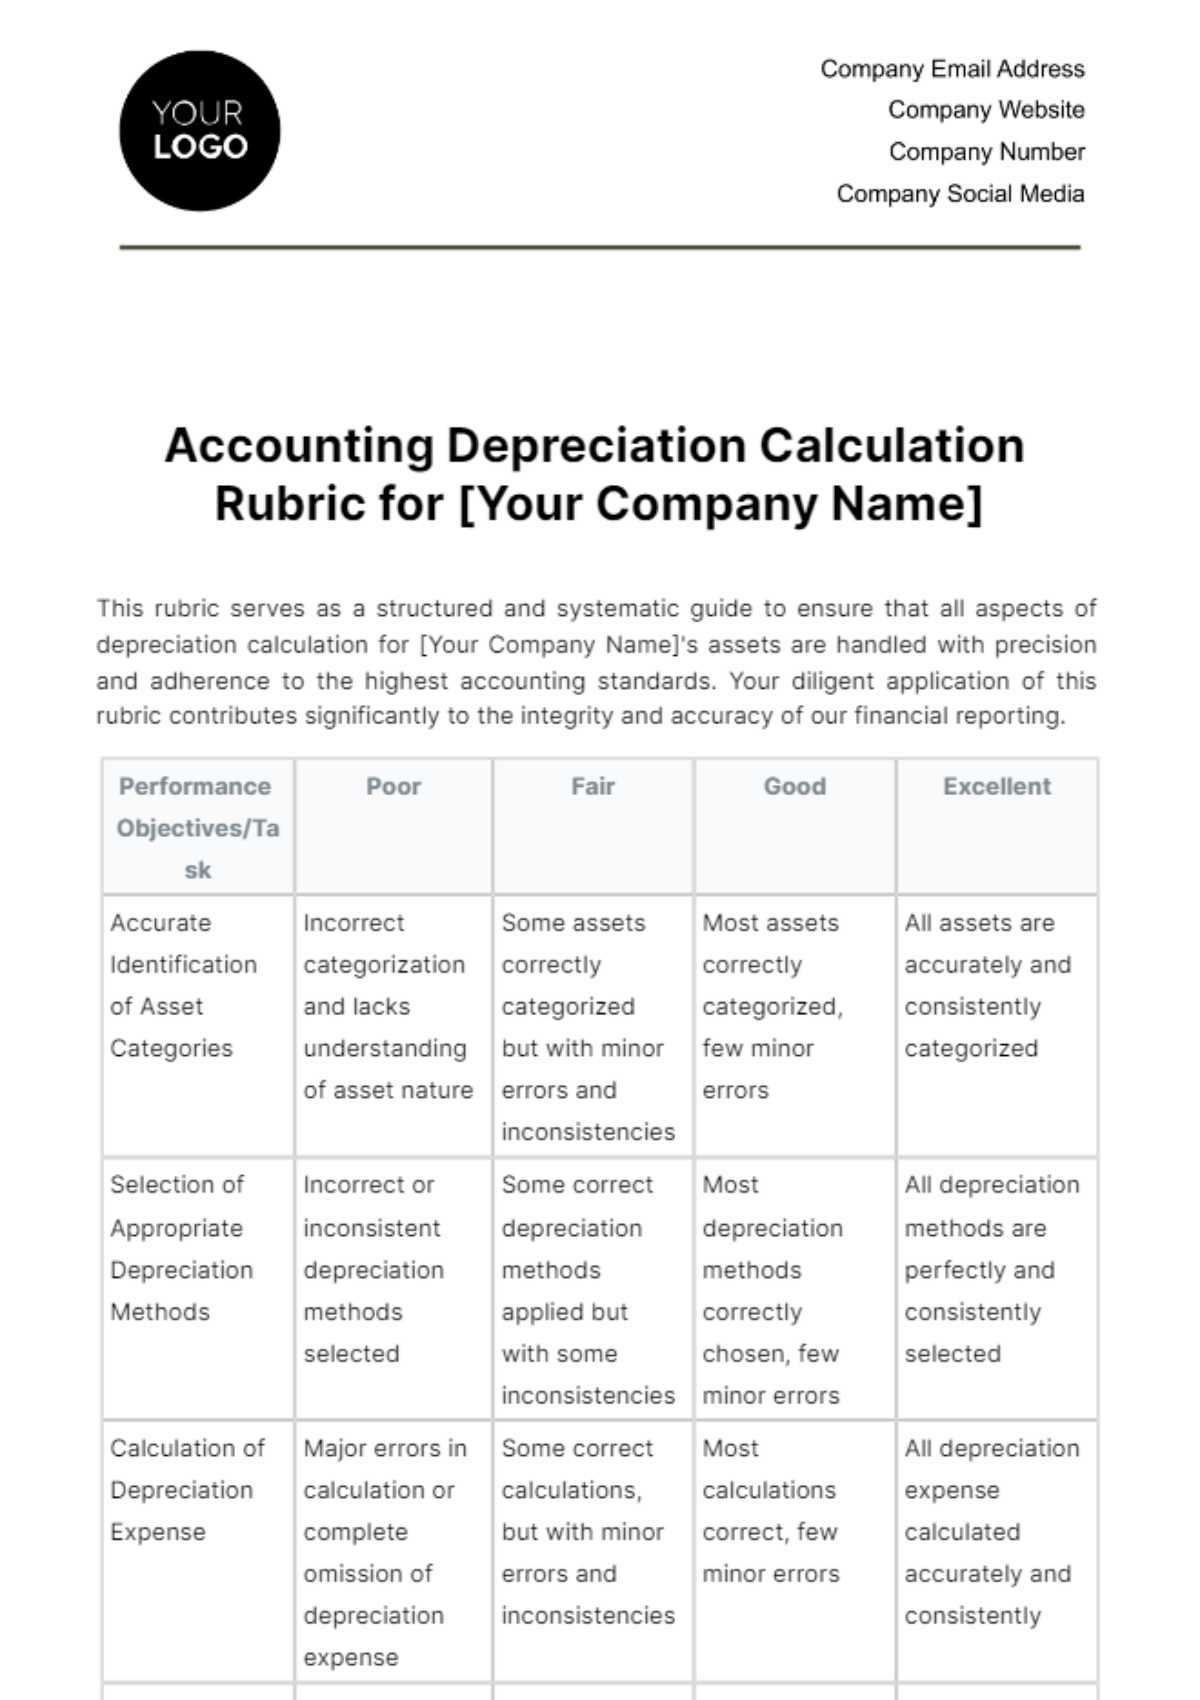 Free Accounting Depreciation Calculation Rubric Template